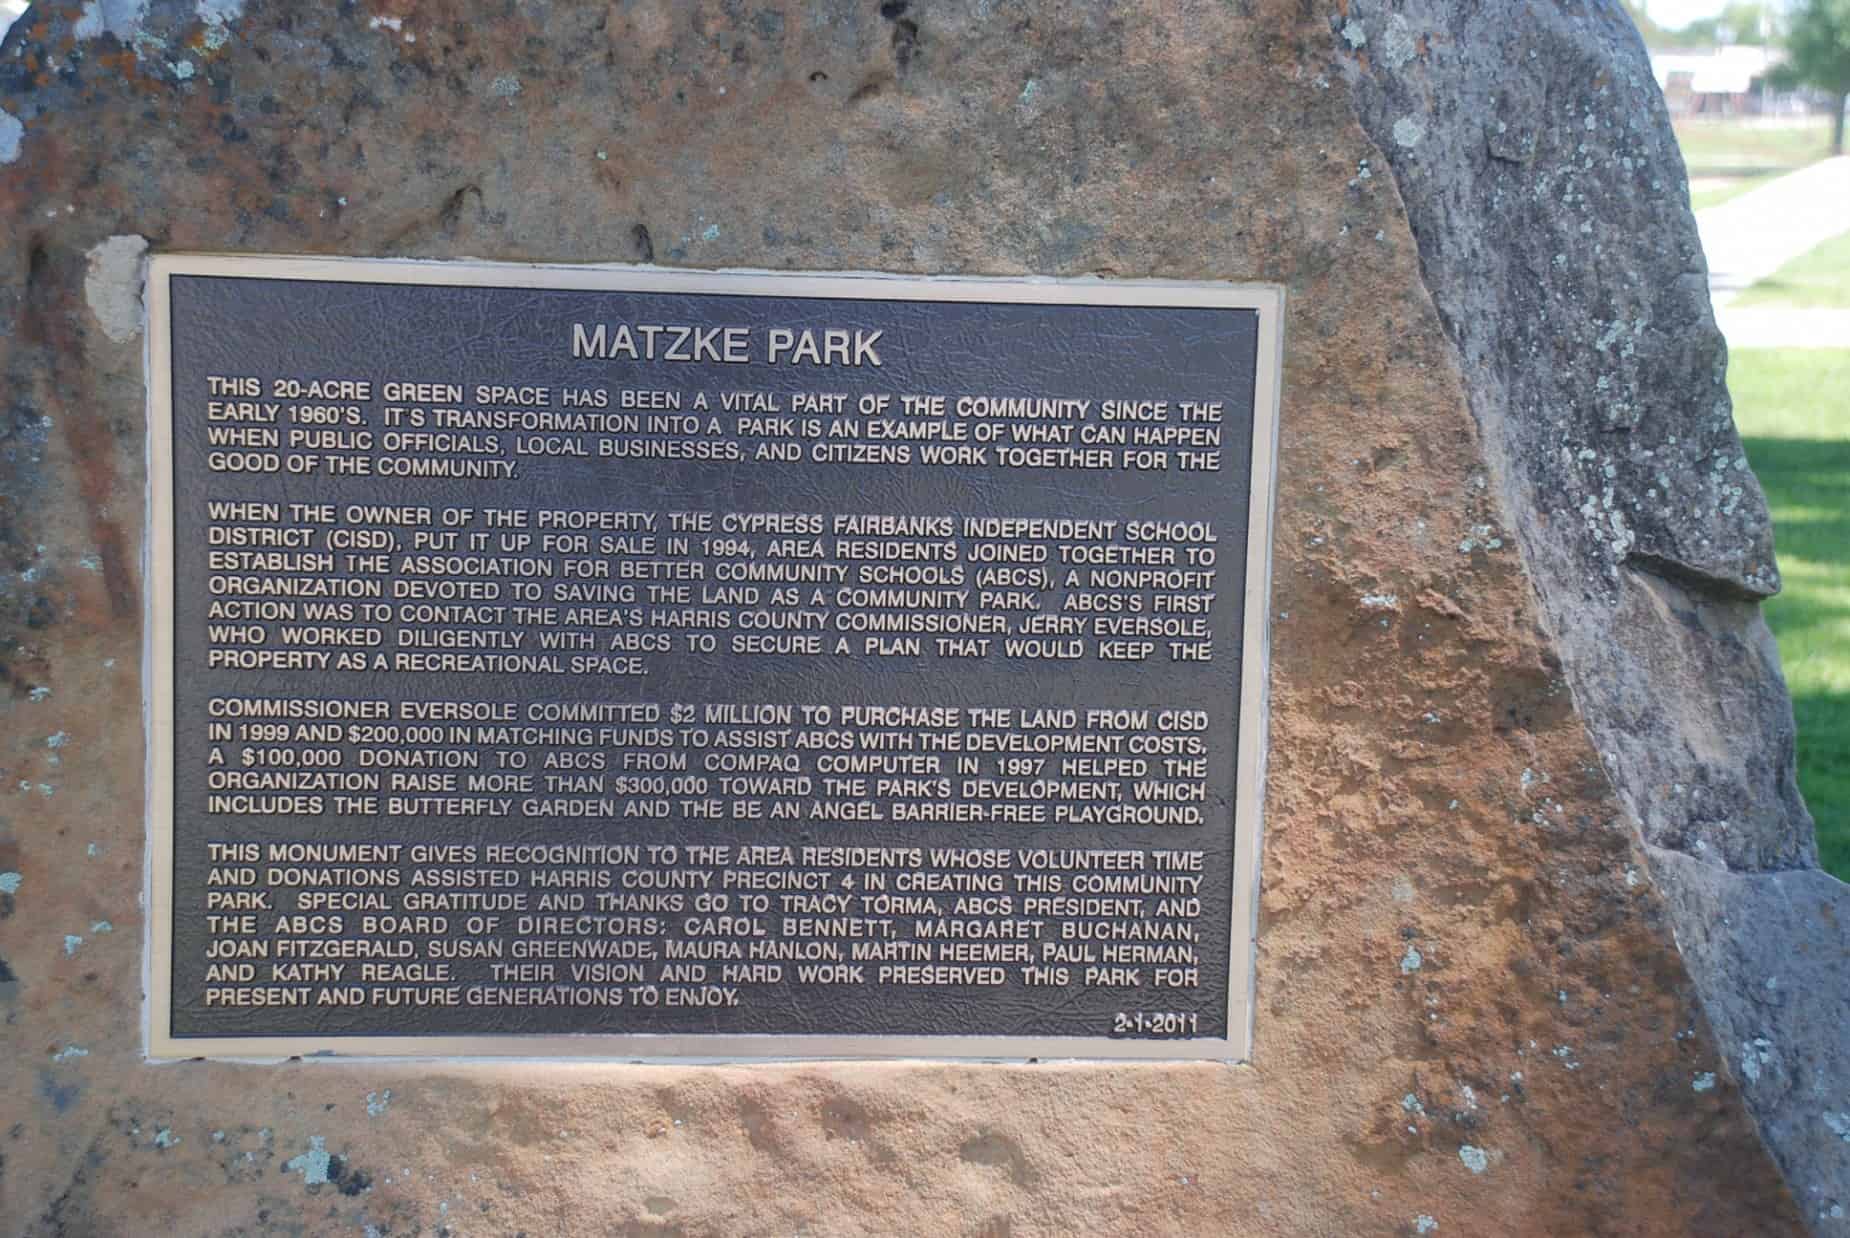 Matzke Park Dedication Monument in Houston TX